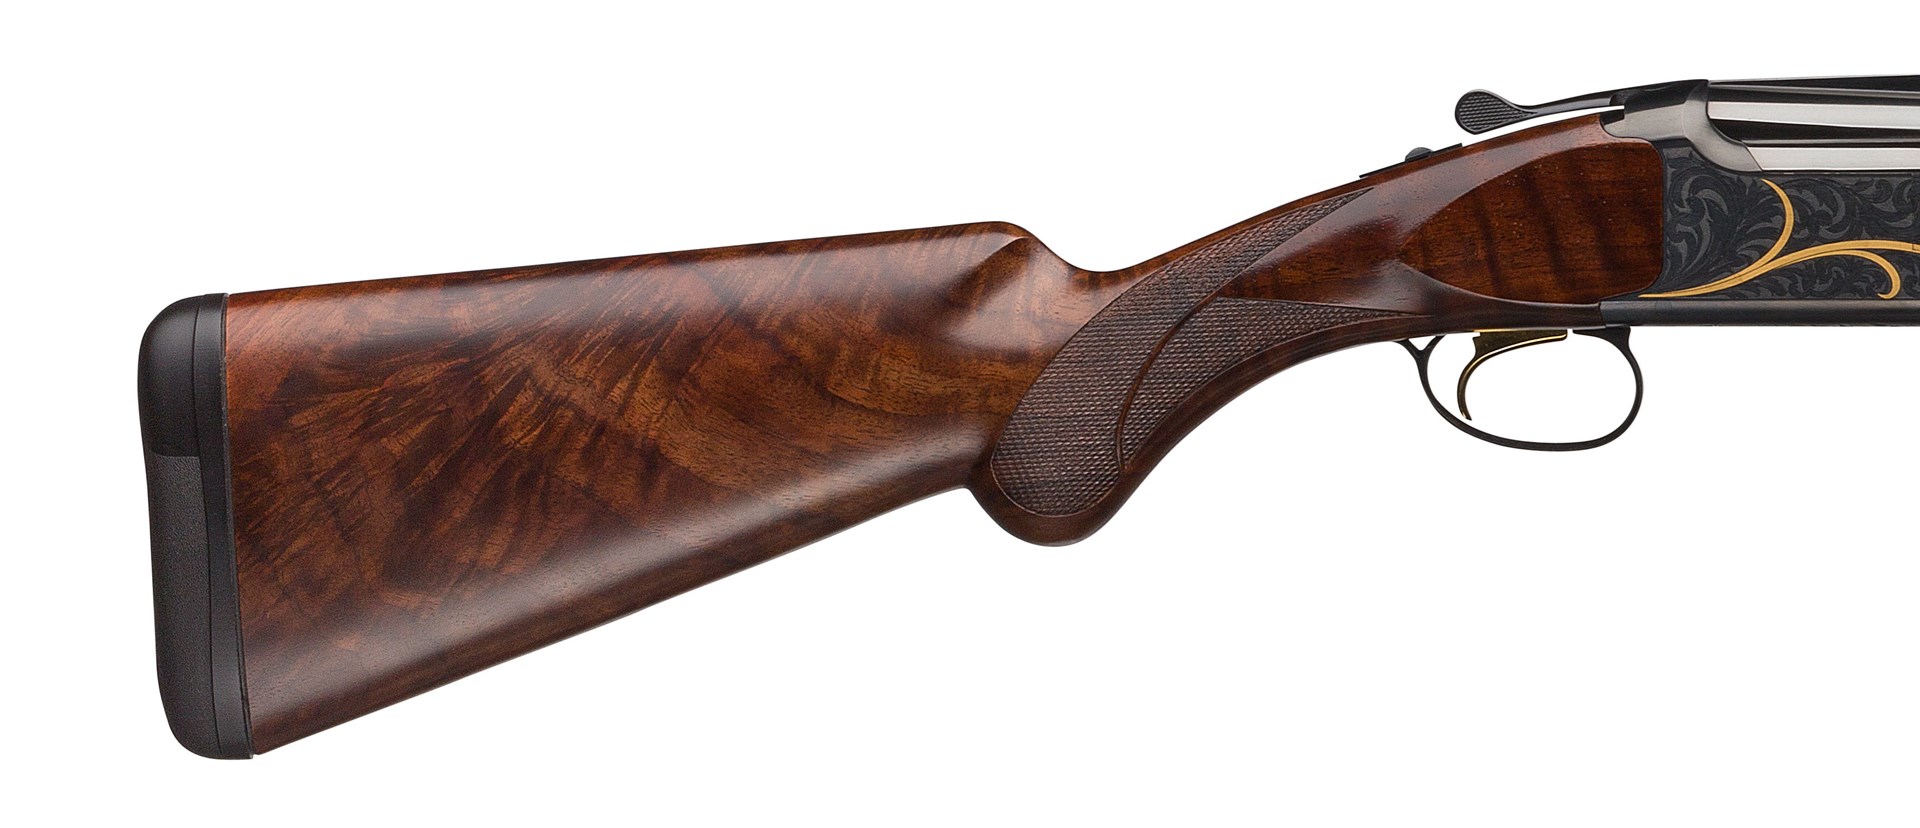 Browning Citori prince of whales grip stock wood profile gunstock shotgun over-under walnut engraving gold enlay